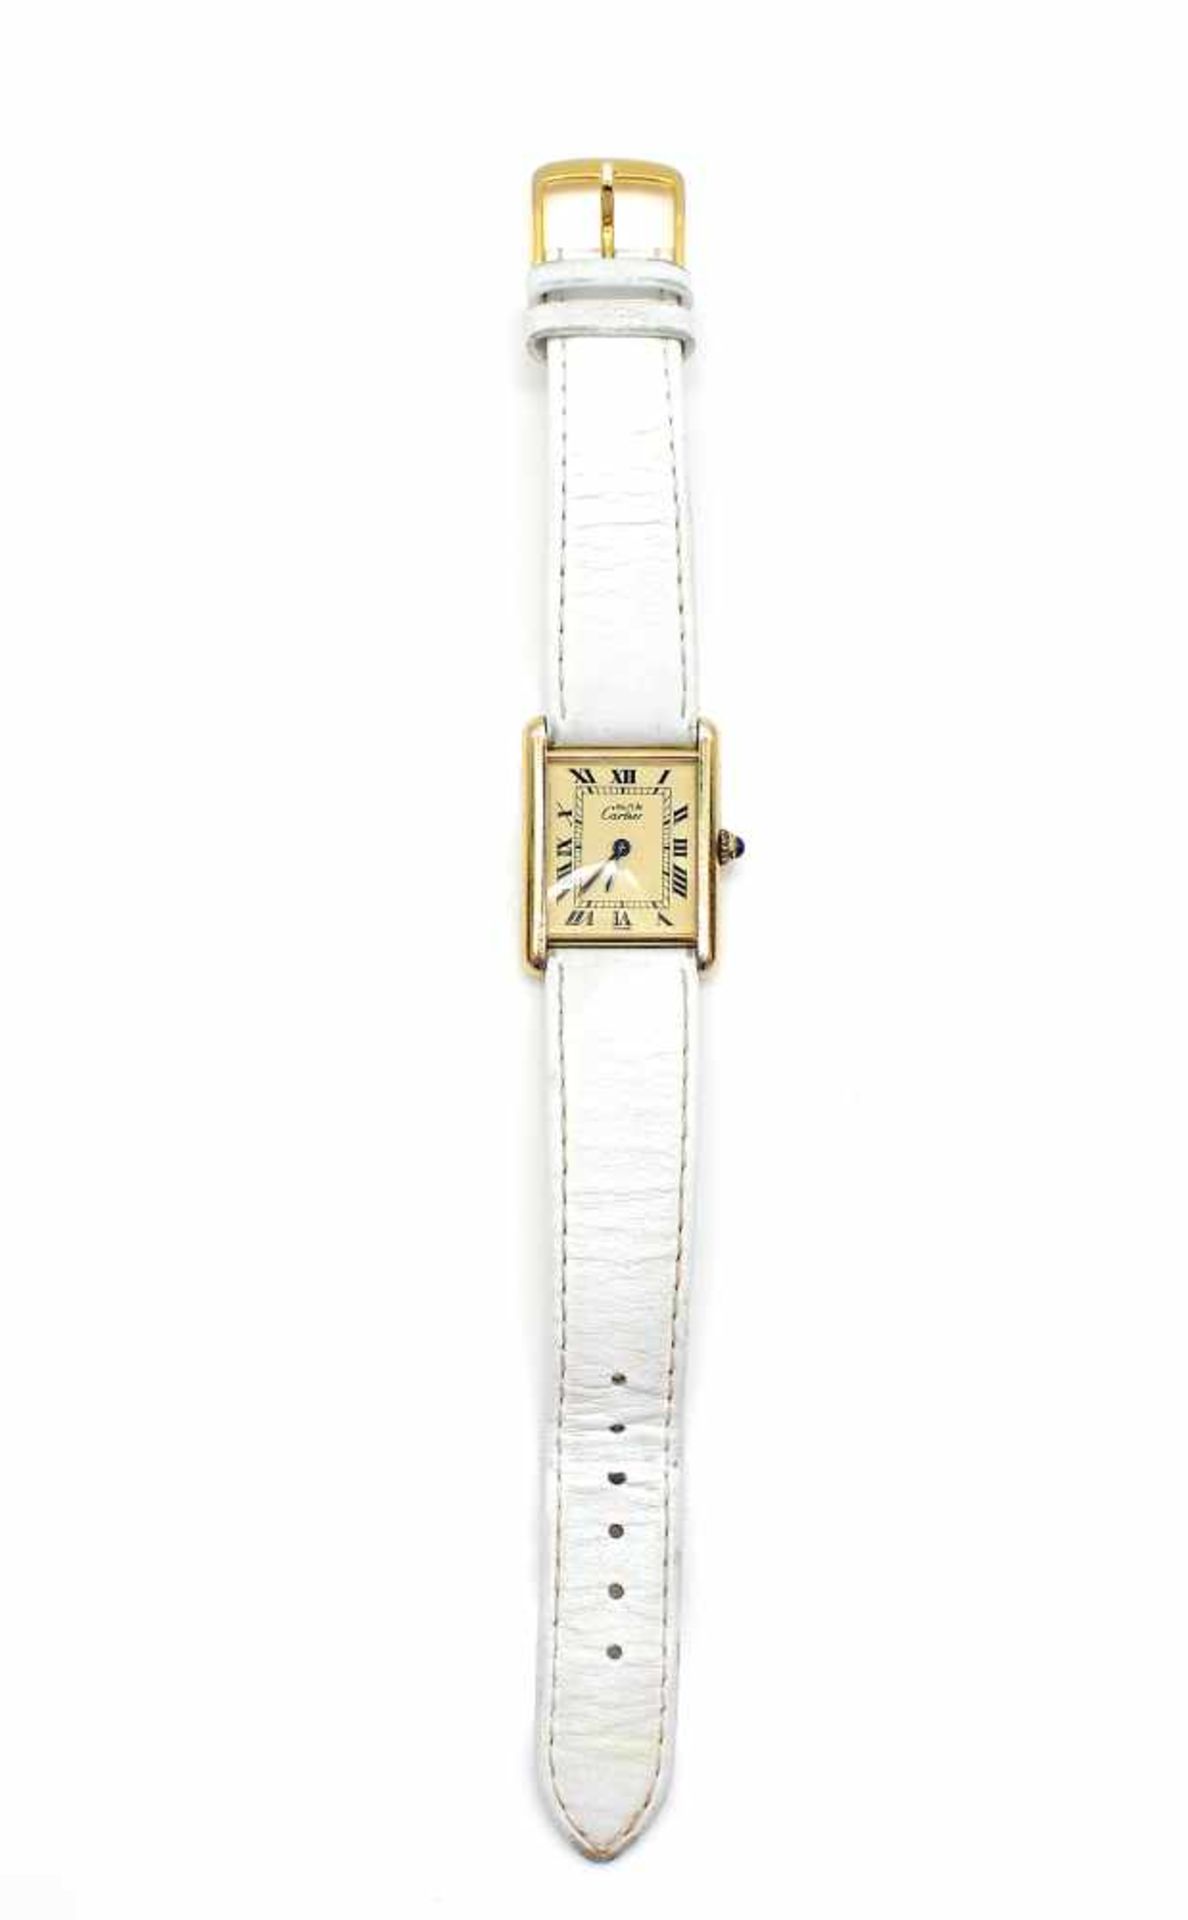 Wrist watch Cartier Tank 1615, Silver-gilt with sapphire cabochon, No. CC 121044 with a white - Bild 4 aus 5